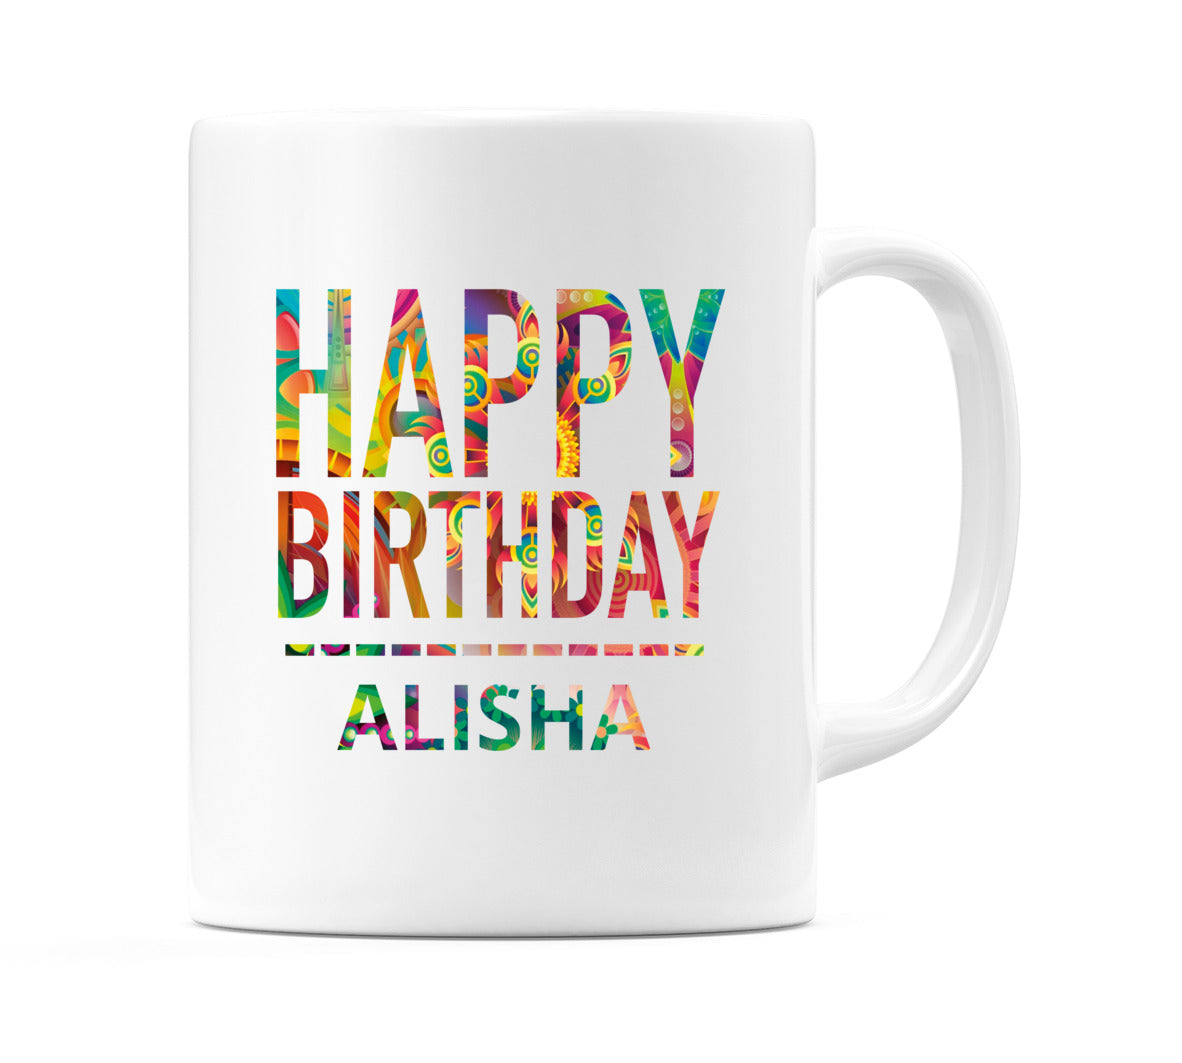 Happy Birthday Alisha (Tie Dye Effect) Mug Cup by WeDoMugs